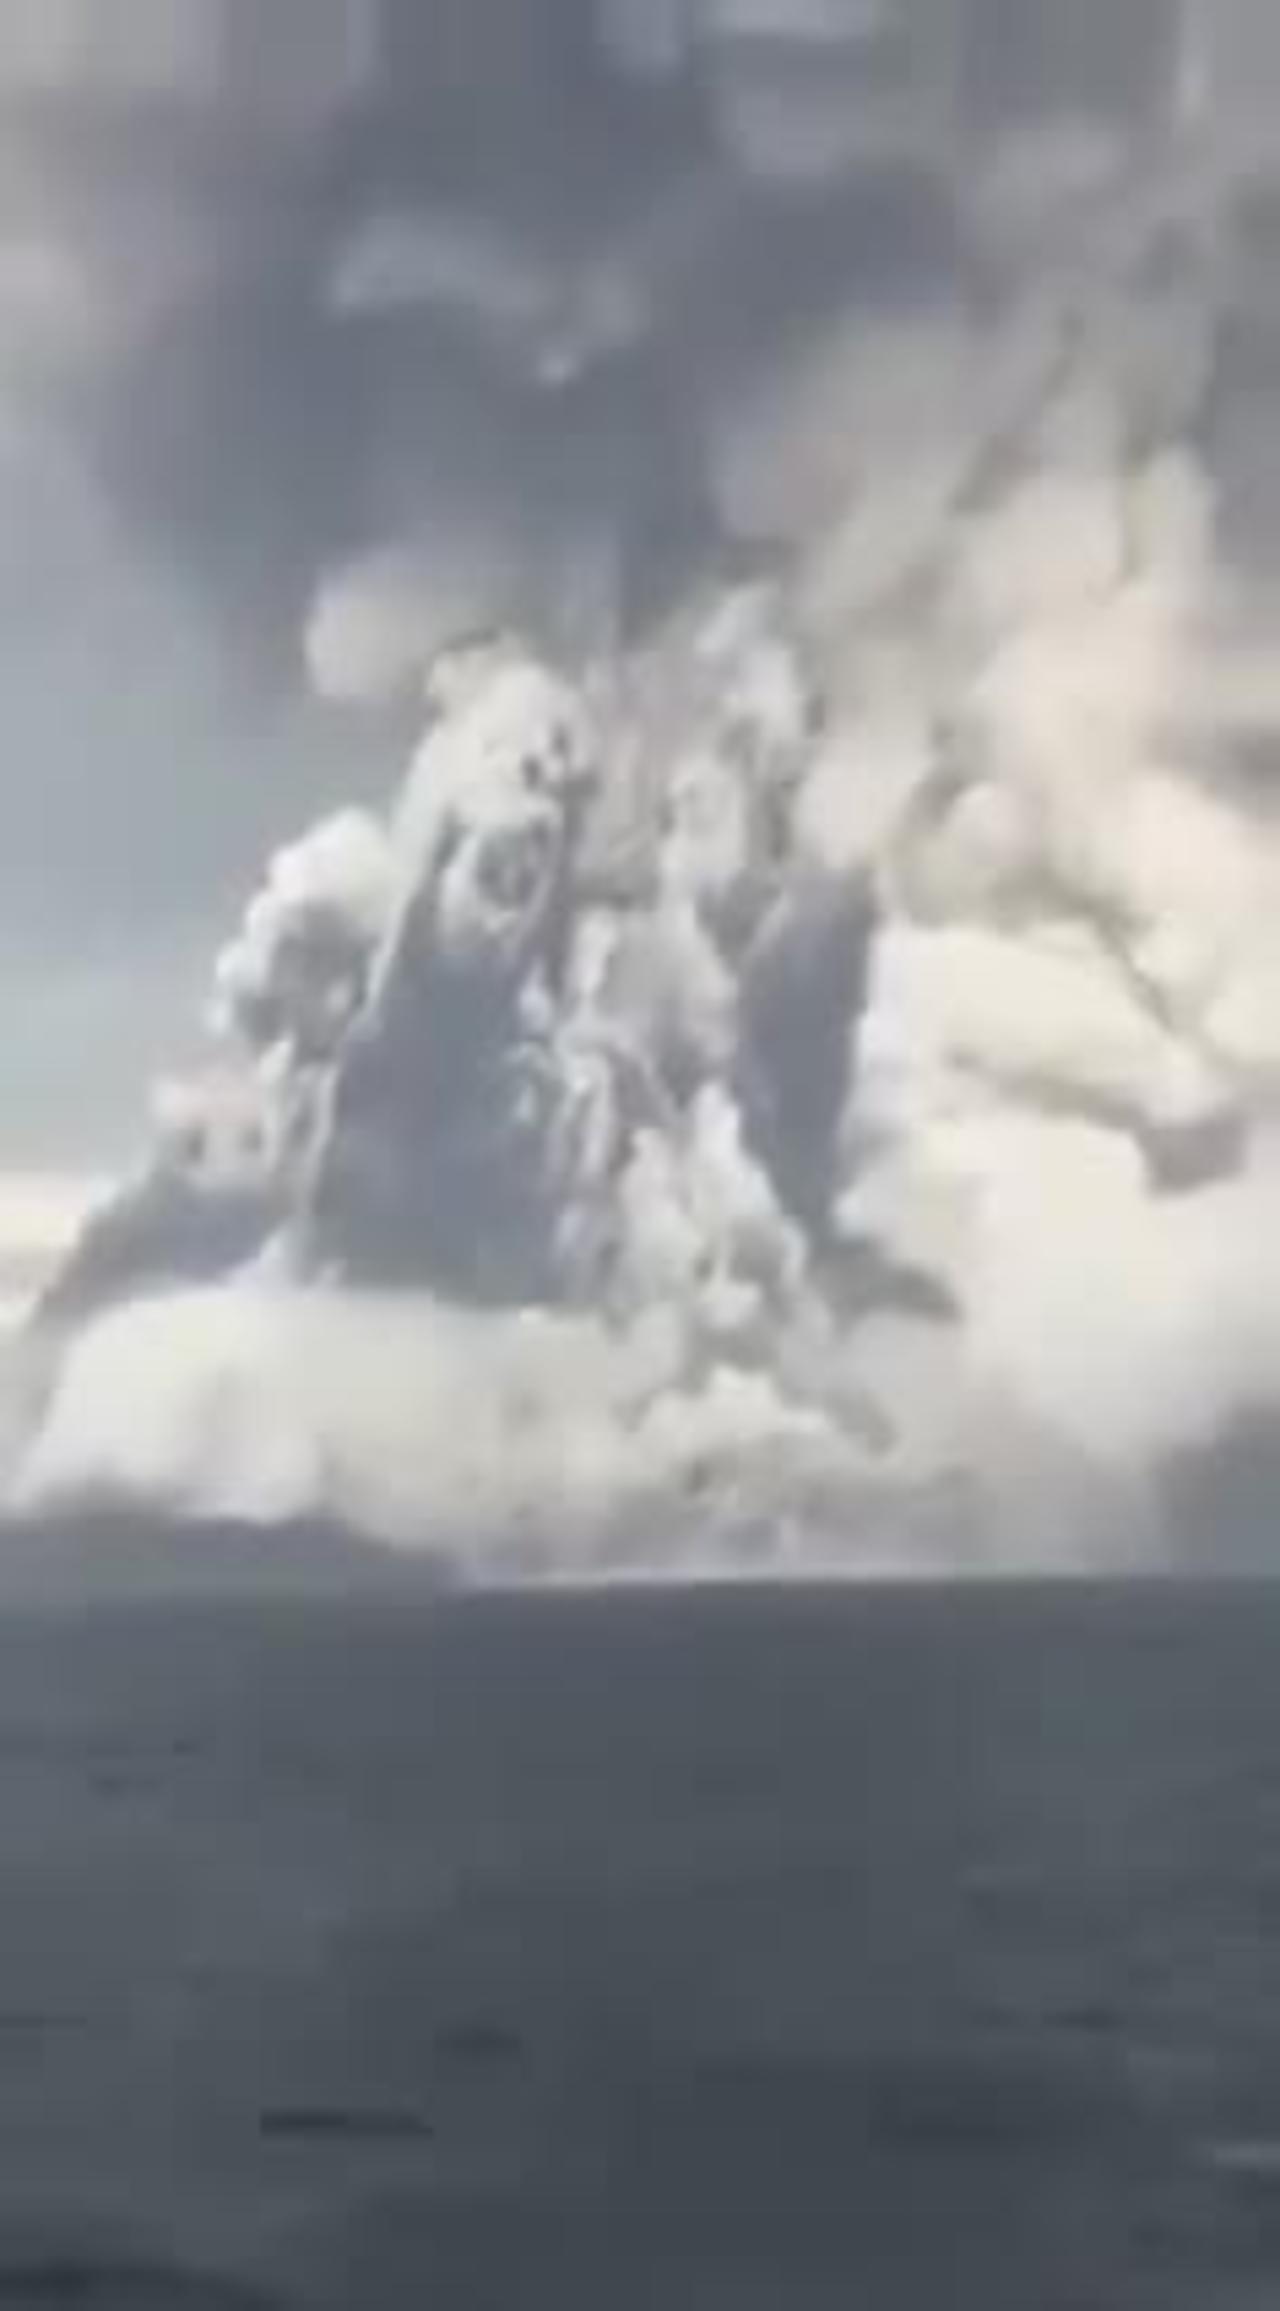 1/16/2022 Footage of massive Tonga volcano eruption that caused Tsunami